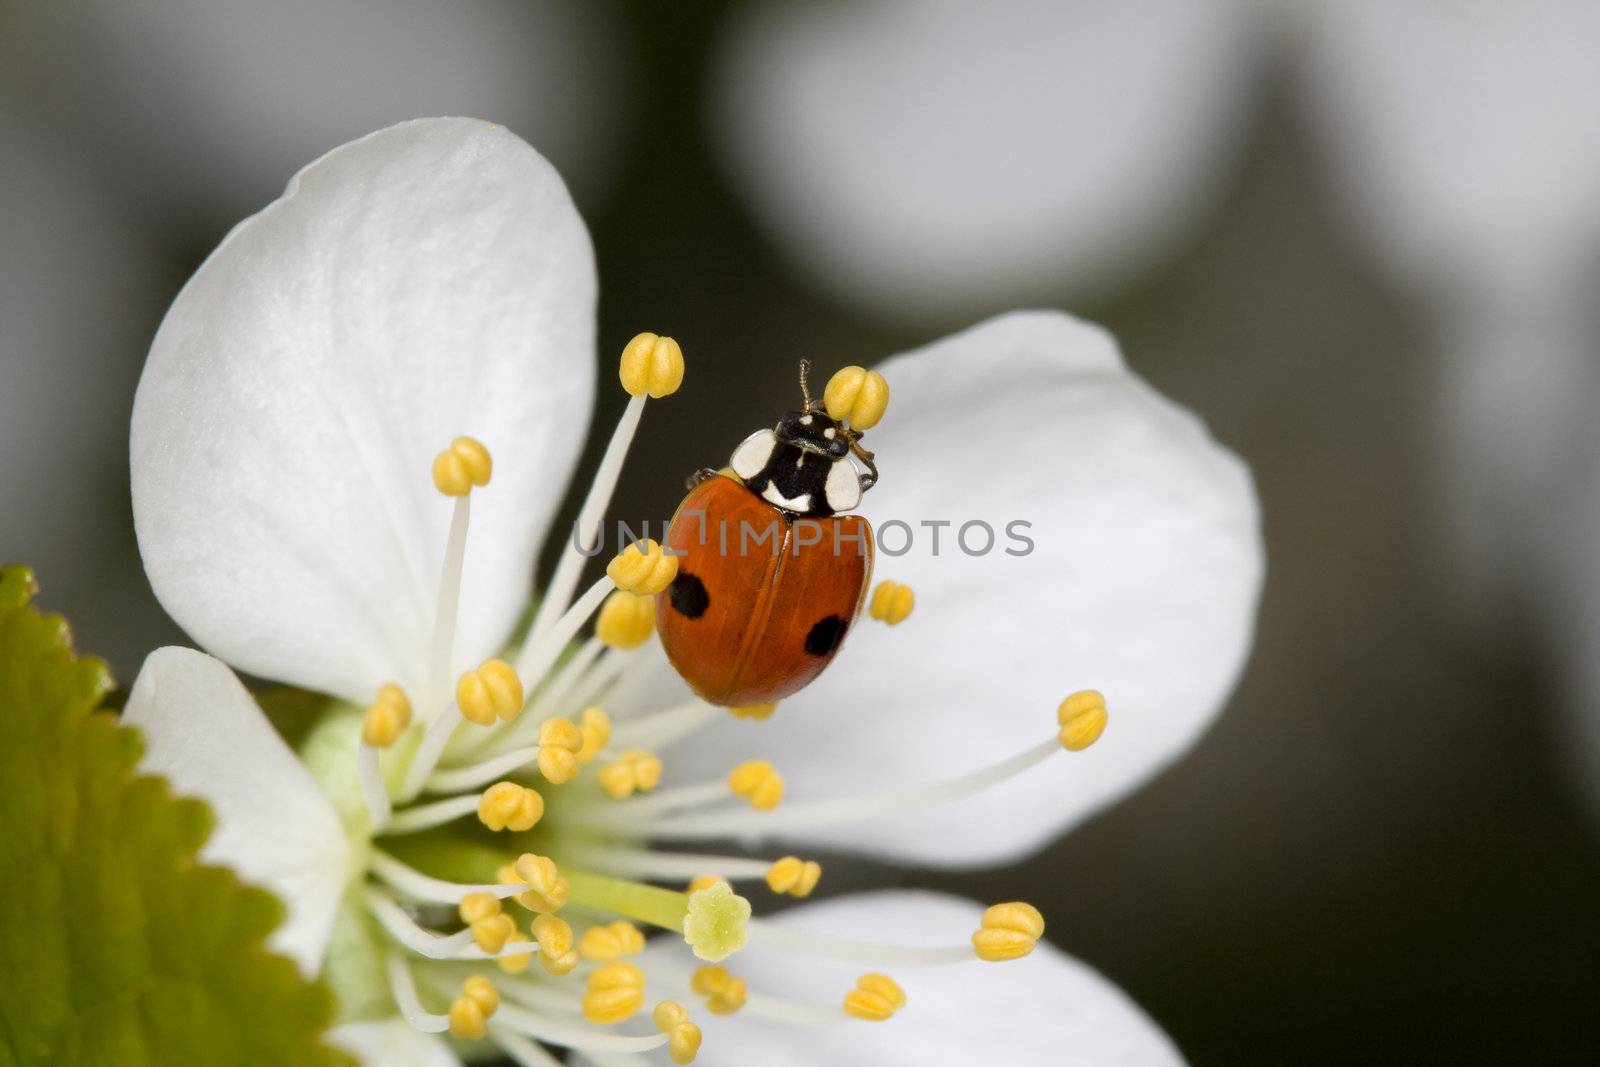 Ladybug on cherry flower by Sazonoff